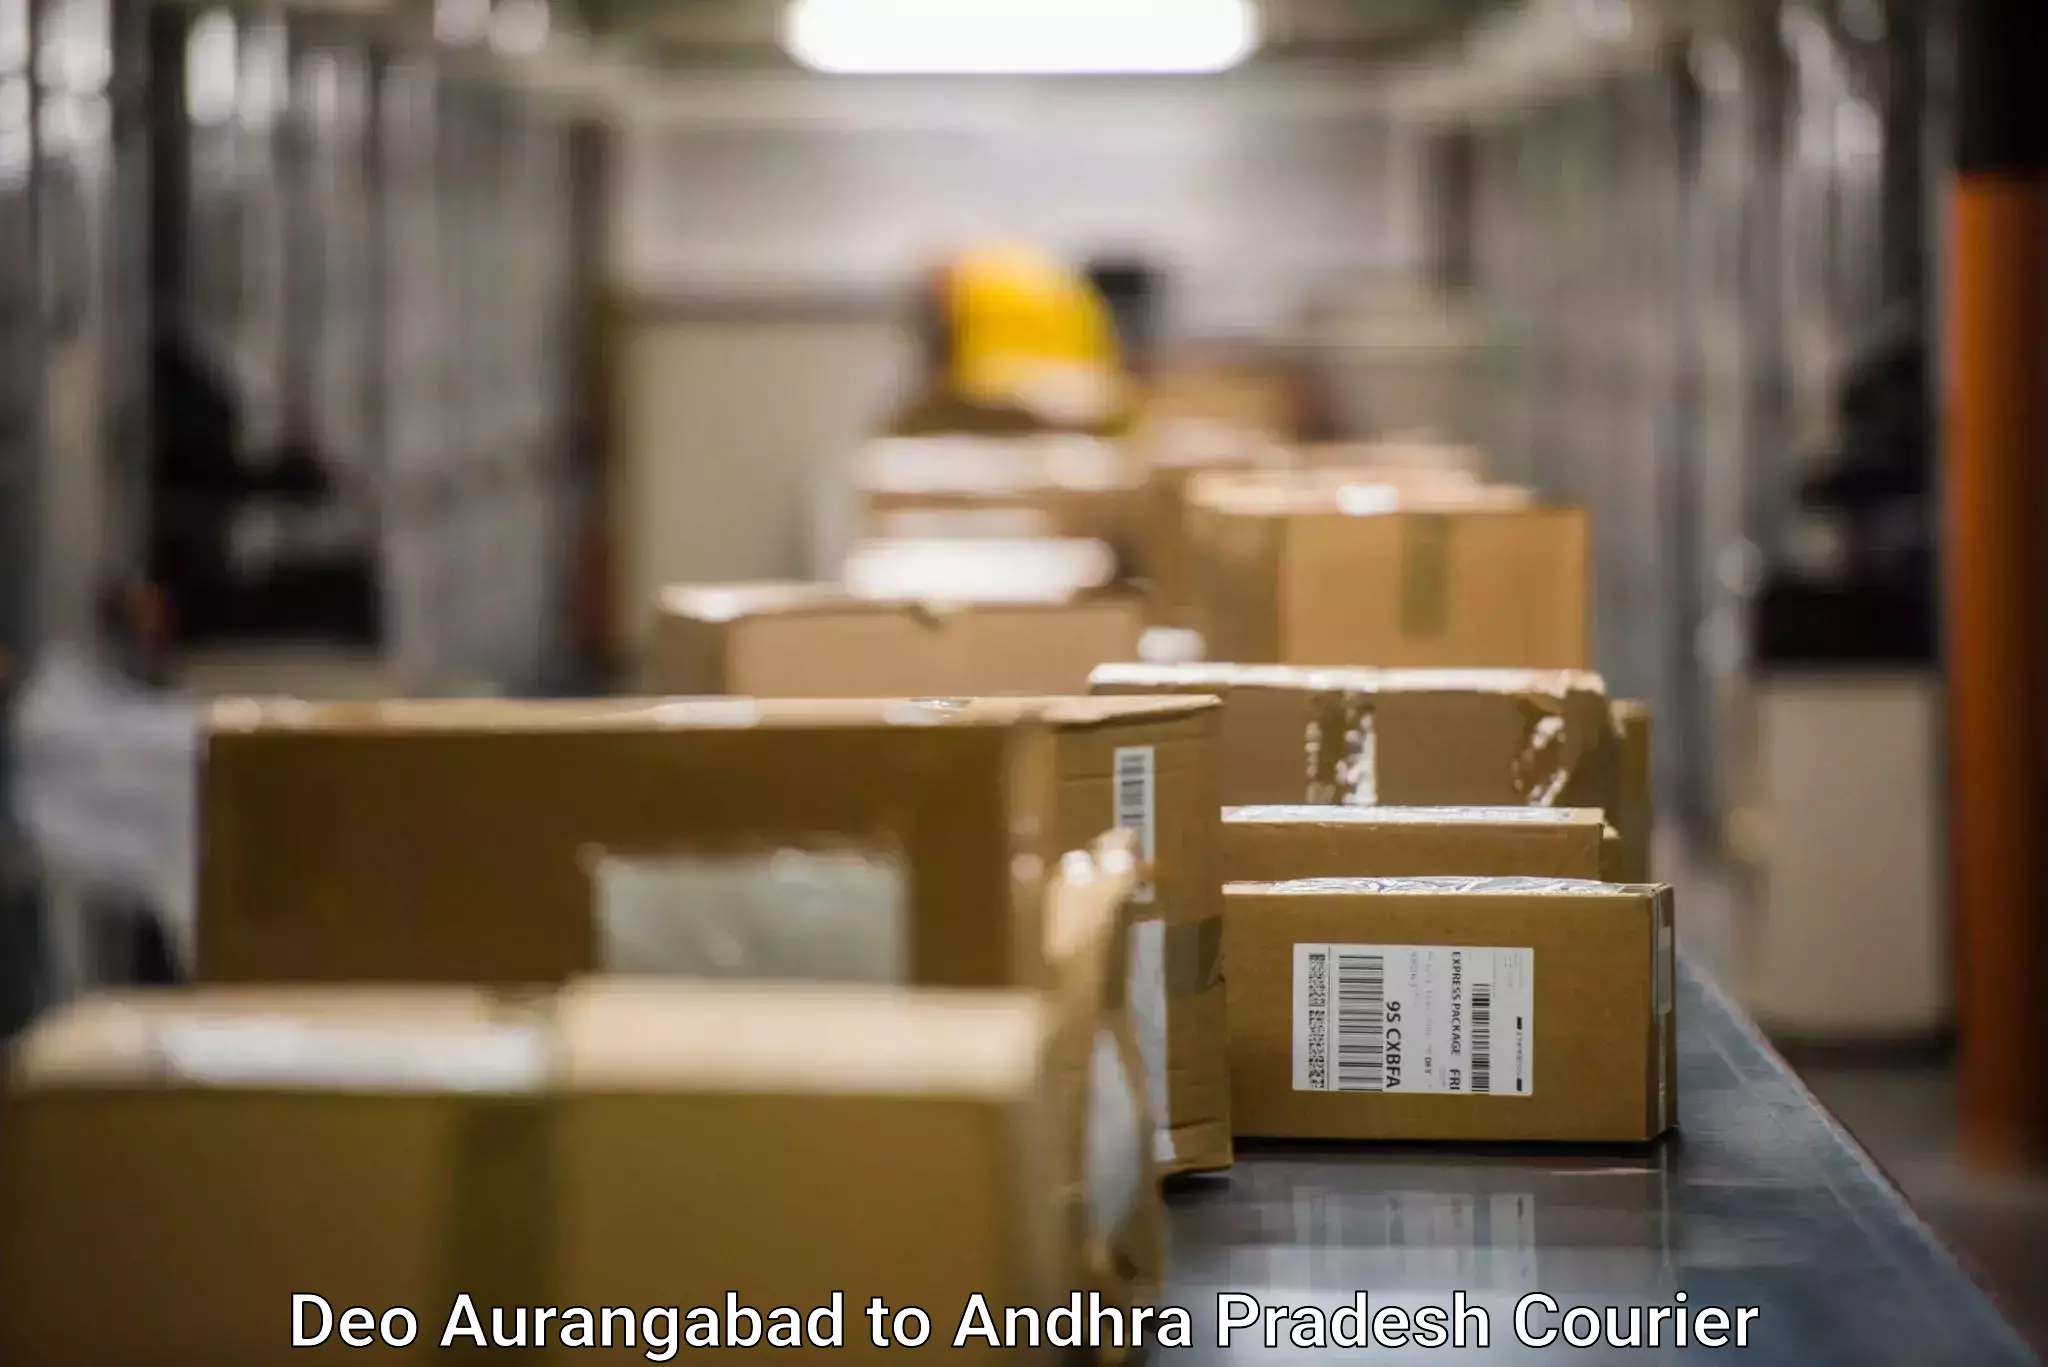 Express mail solutions Deo Aurangabad to Visakhapatnam Port